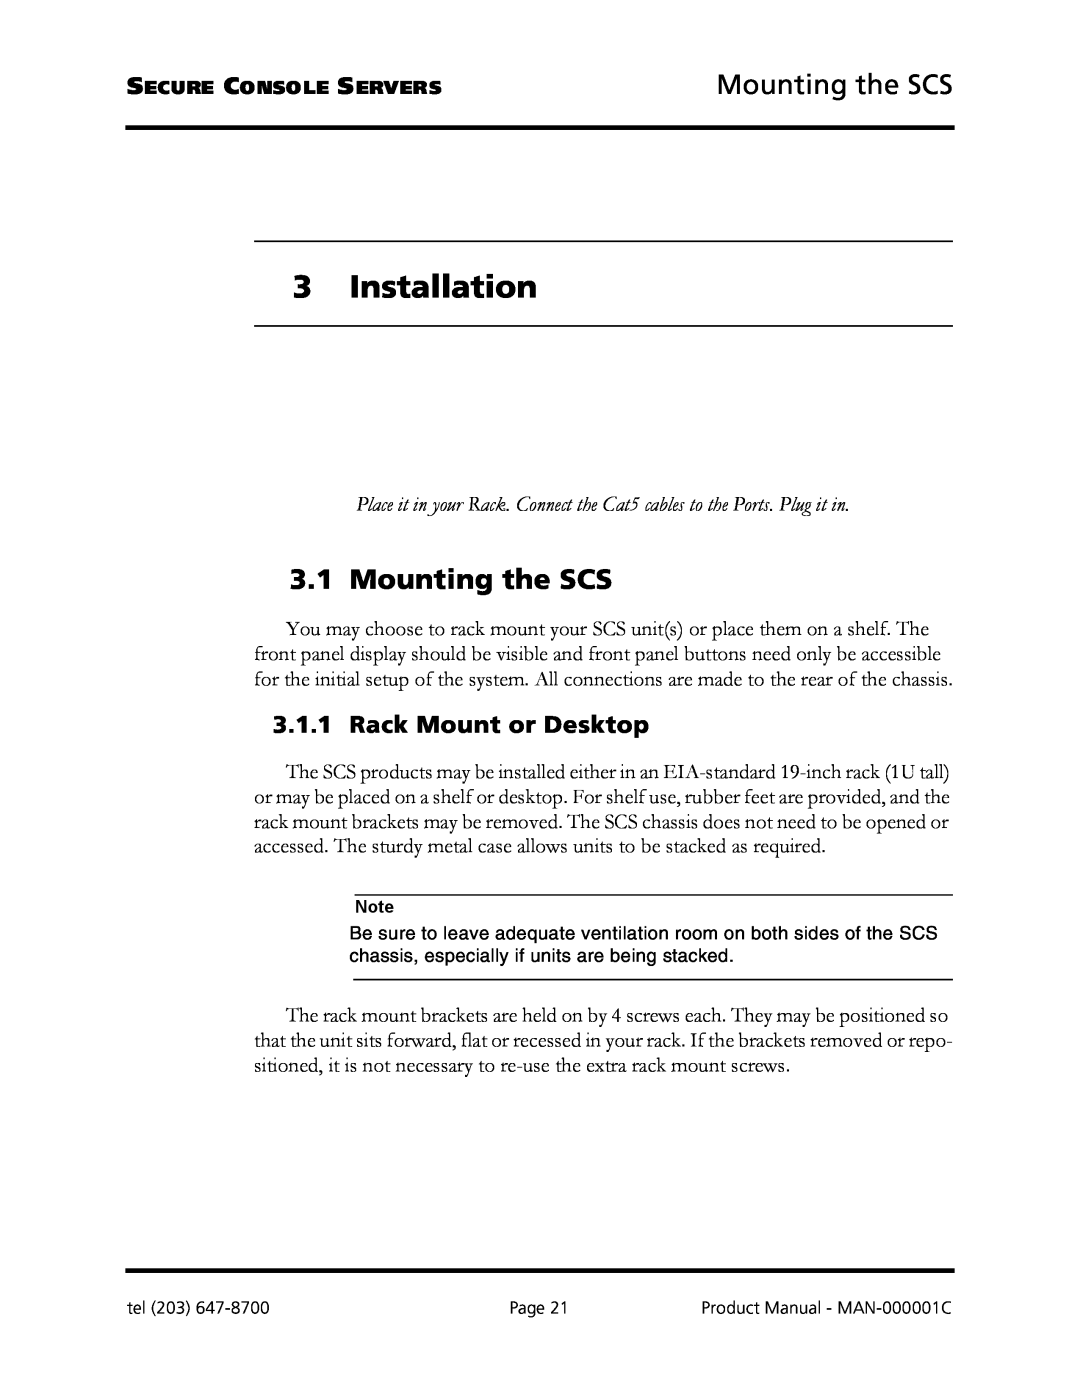 Logical Solutions SCS-R manual Installation, Mounting the SCS, Rack Mount or Desktop 